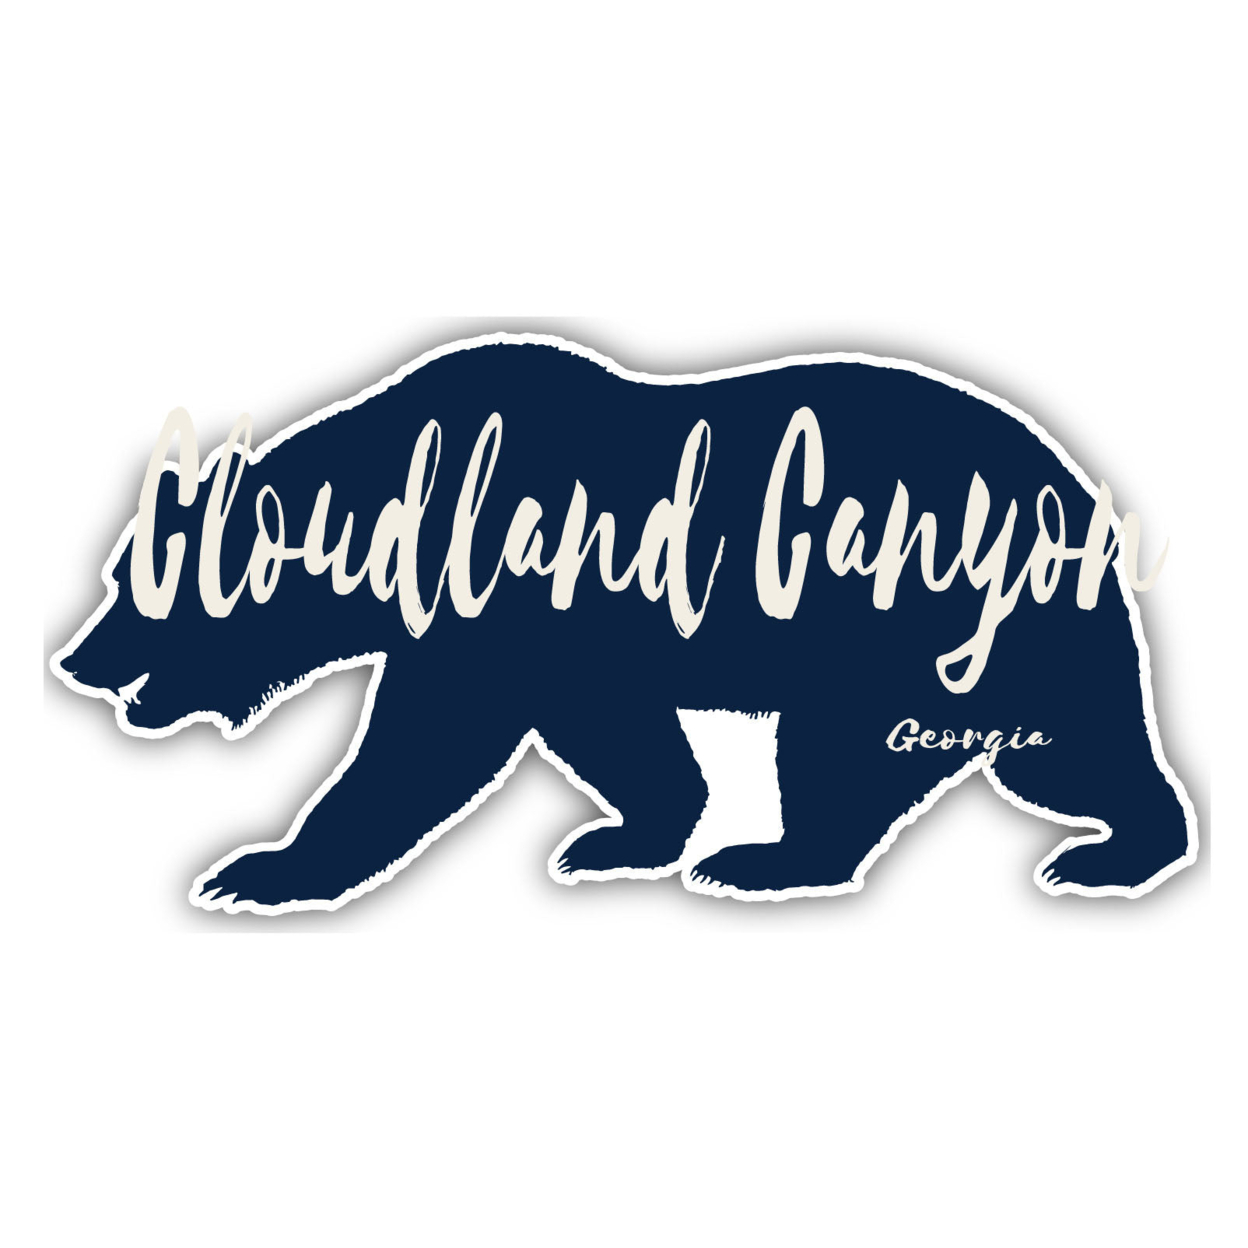 Cloudland Canyon Georgia Souvenir Decorative Stickers (Choose Theme And Size) - 4-Pack, 4-Inch, Bear